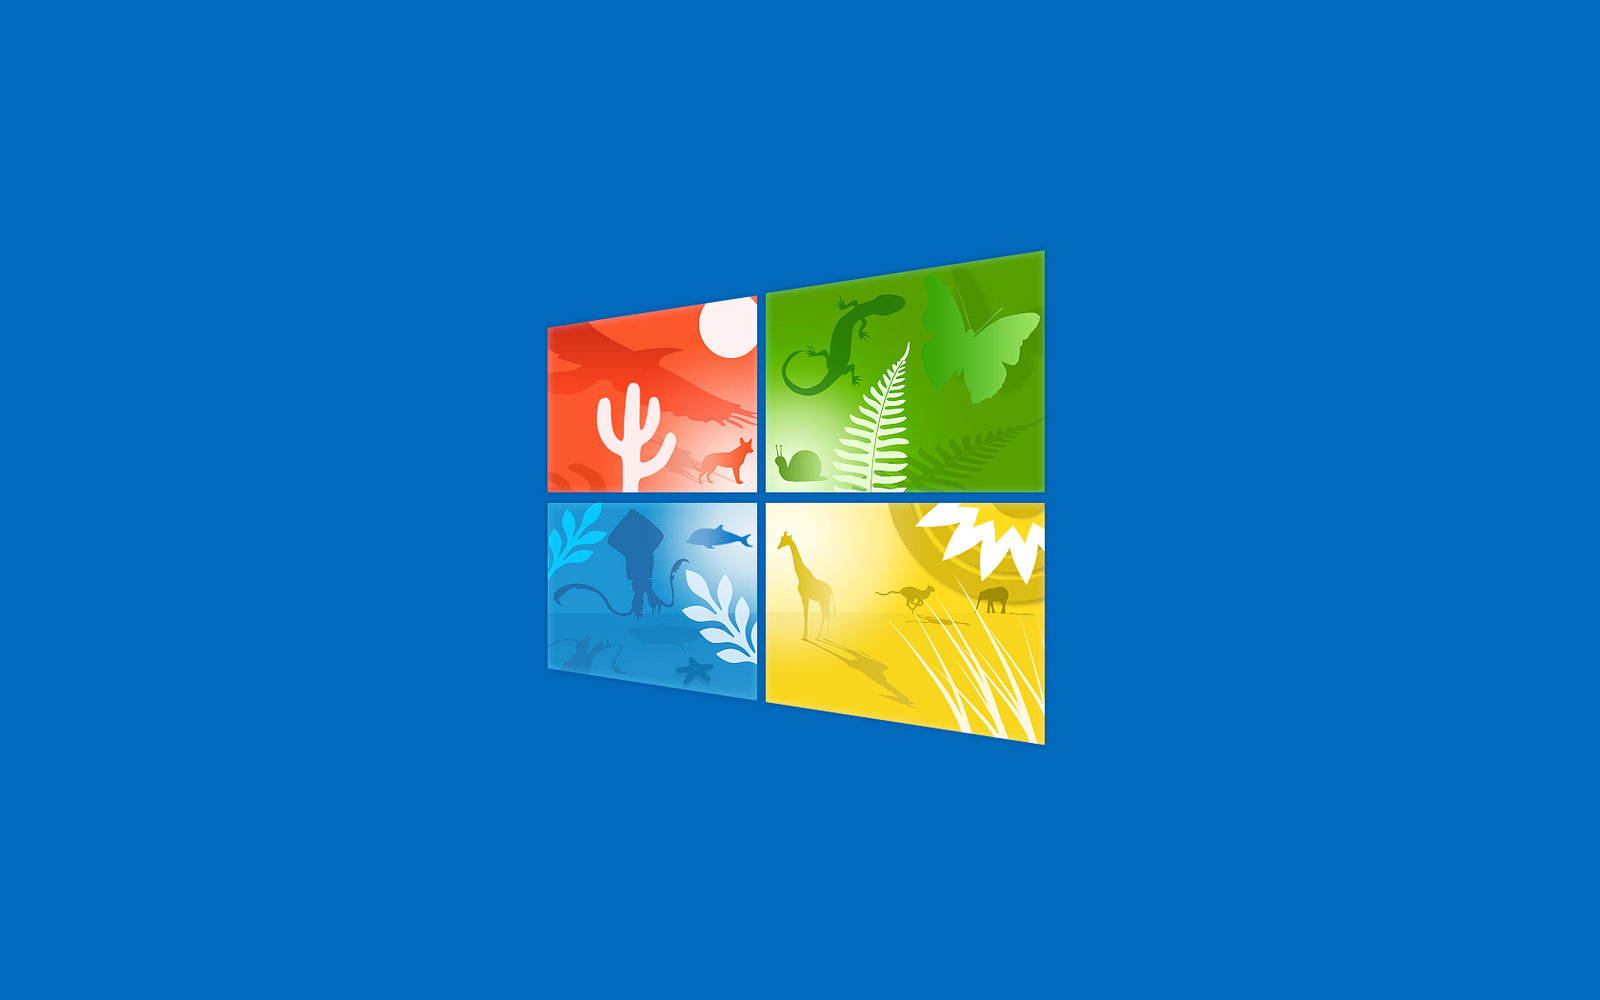 cool logo windows image hd 720P wallpaper